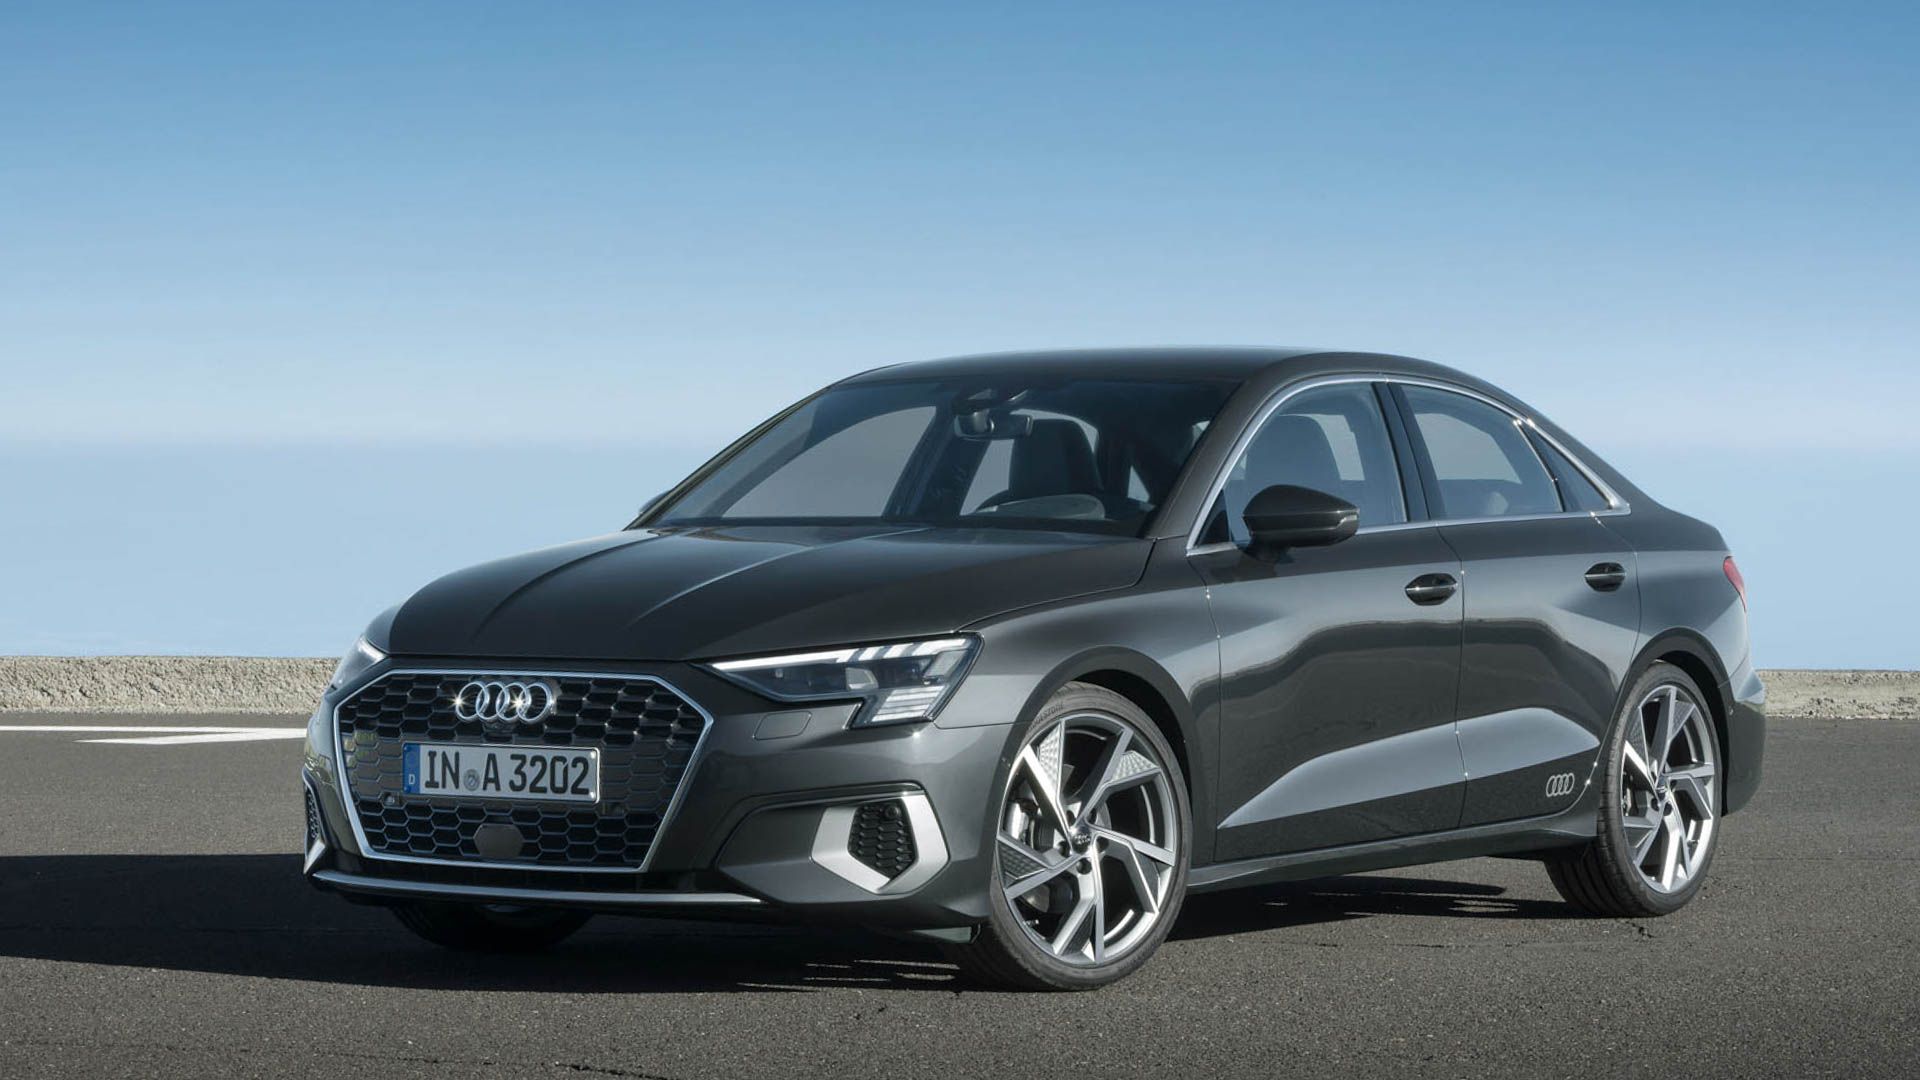 SPIED: Audi RS3 Sedan Spy Photo Surface Ahead of Reveal